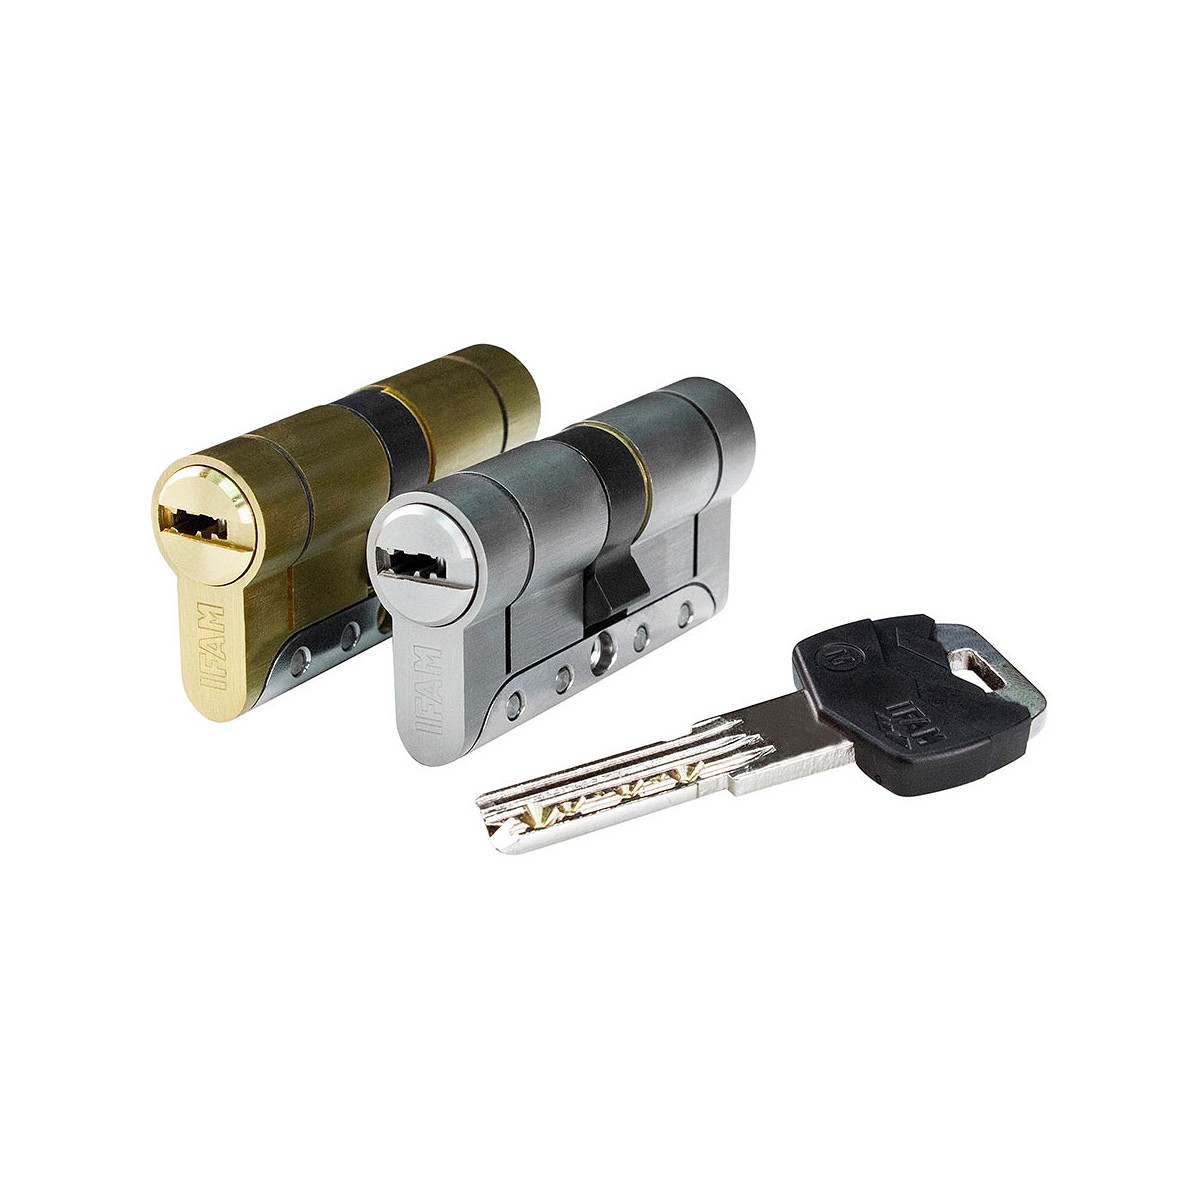 Cilindro iridium m irm3030lc latón 60mm (30+30mm) leva corta 13mm. con 5 llaves de seguridad. ifam